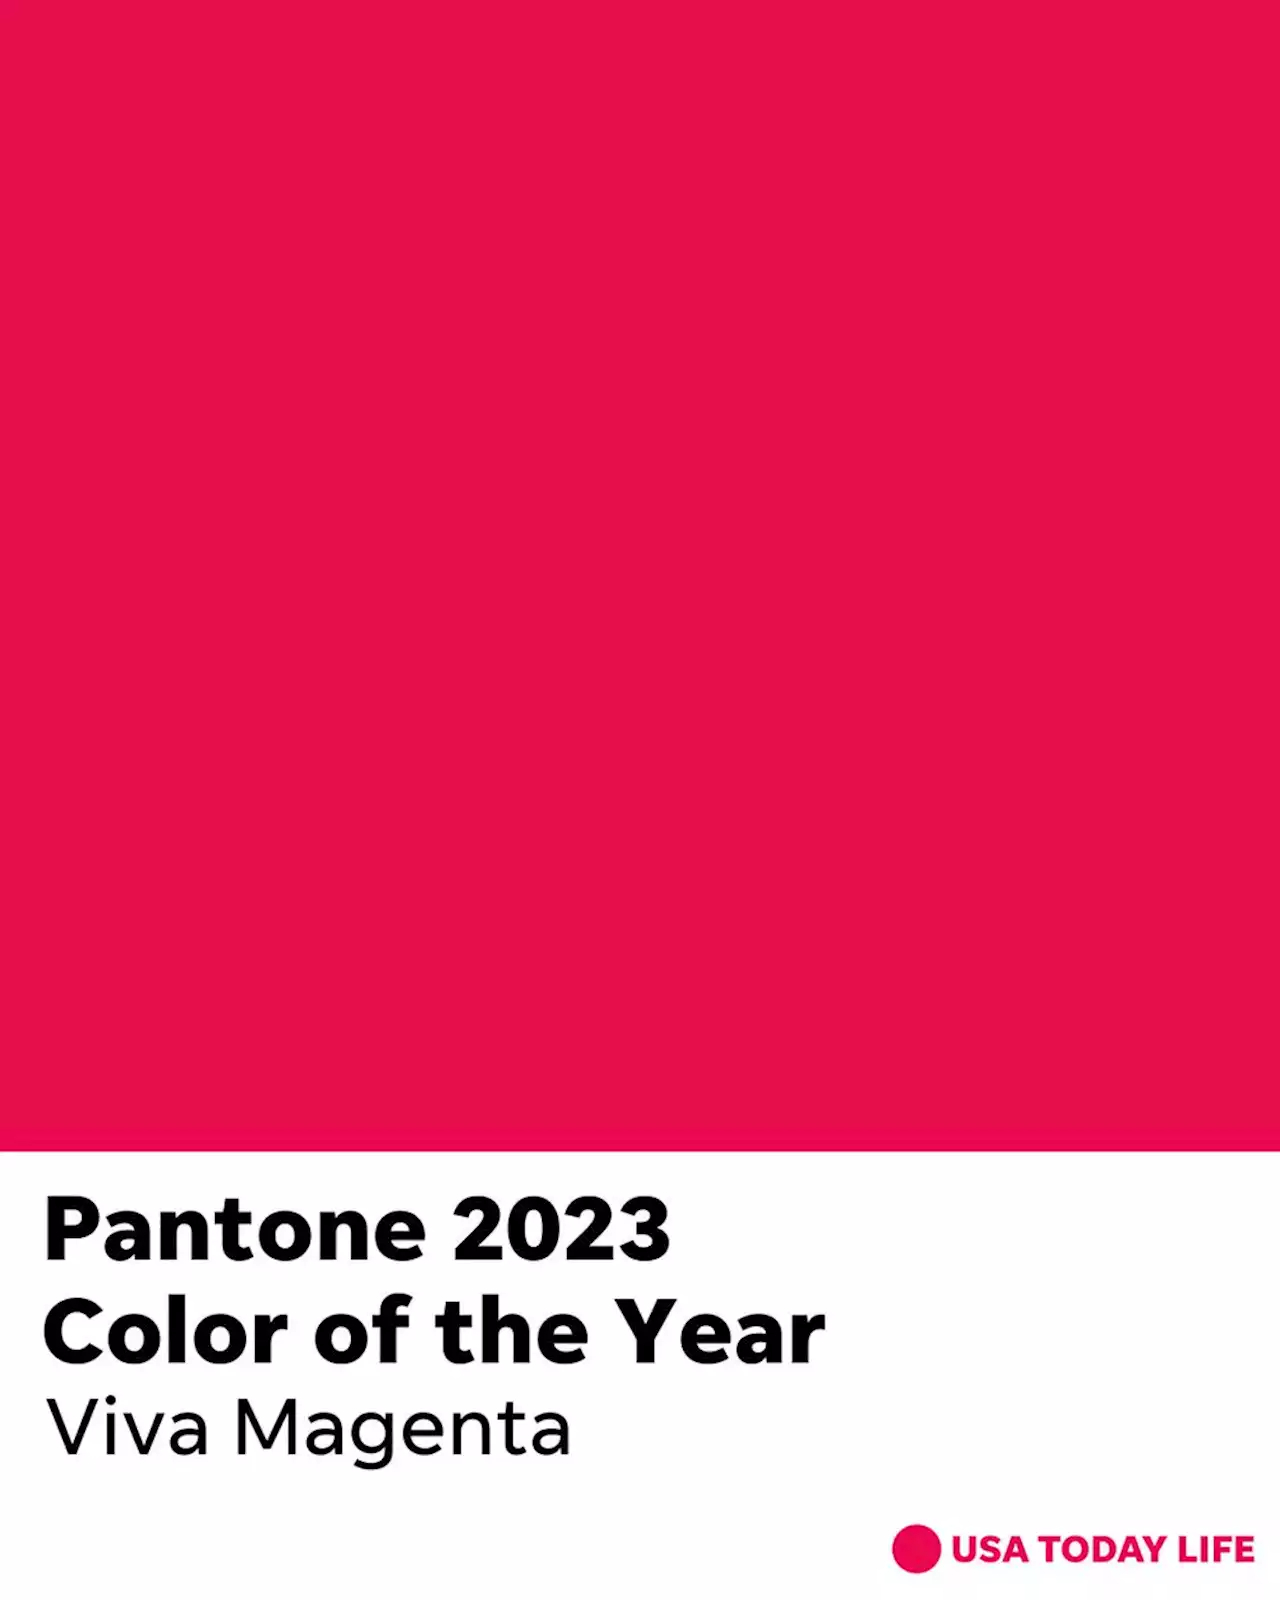 Pantone 宣布 2023 年代表色「Viva Magenta」